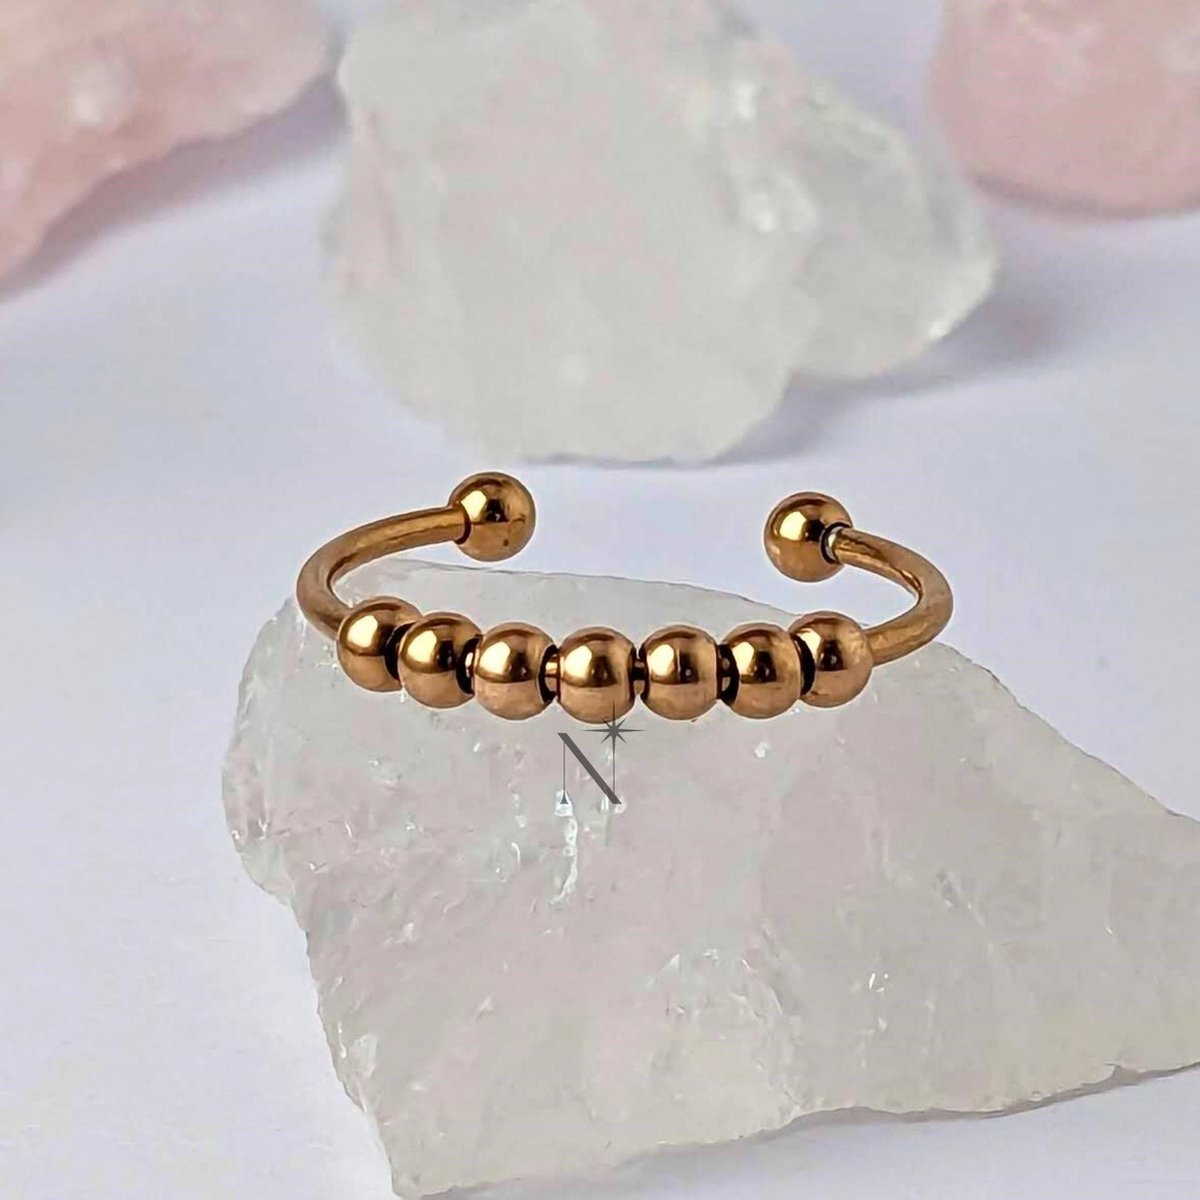 Luminora Bead Ring Roségoud - Fidget Ring Parels - Anxiety Ring - Stress Ring - Anti Stress Ring - Spinner Ring - Spinning Ring - Draai Ring - Wellness Sieraden